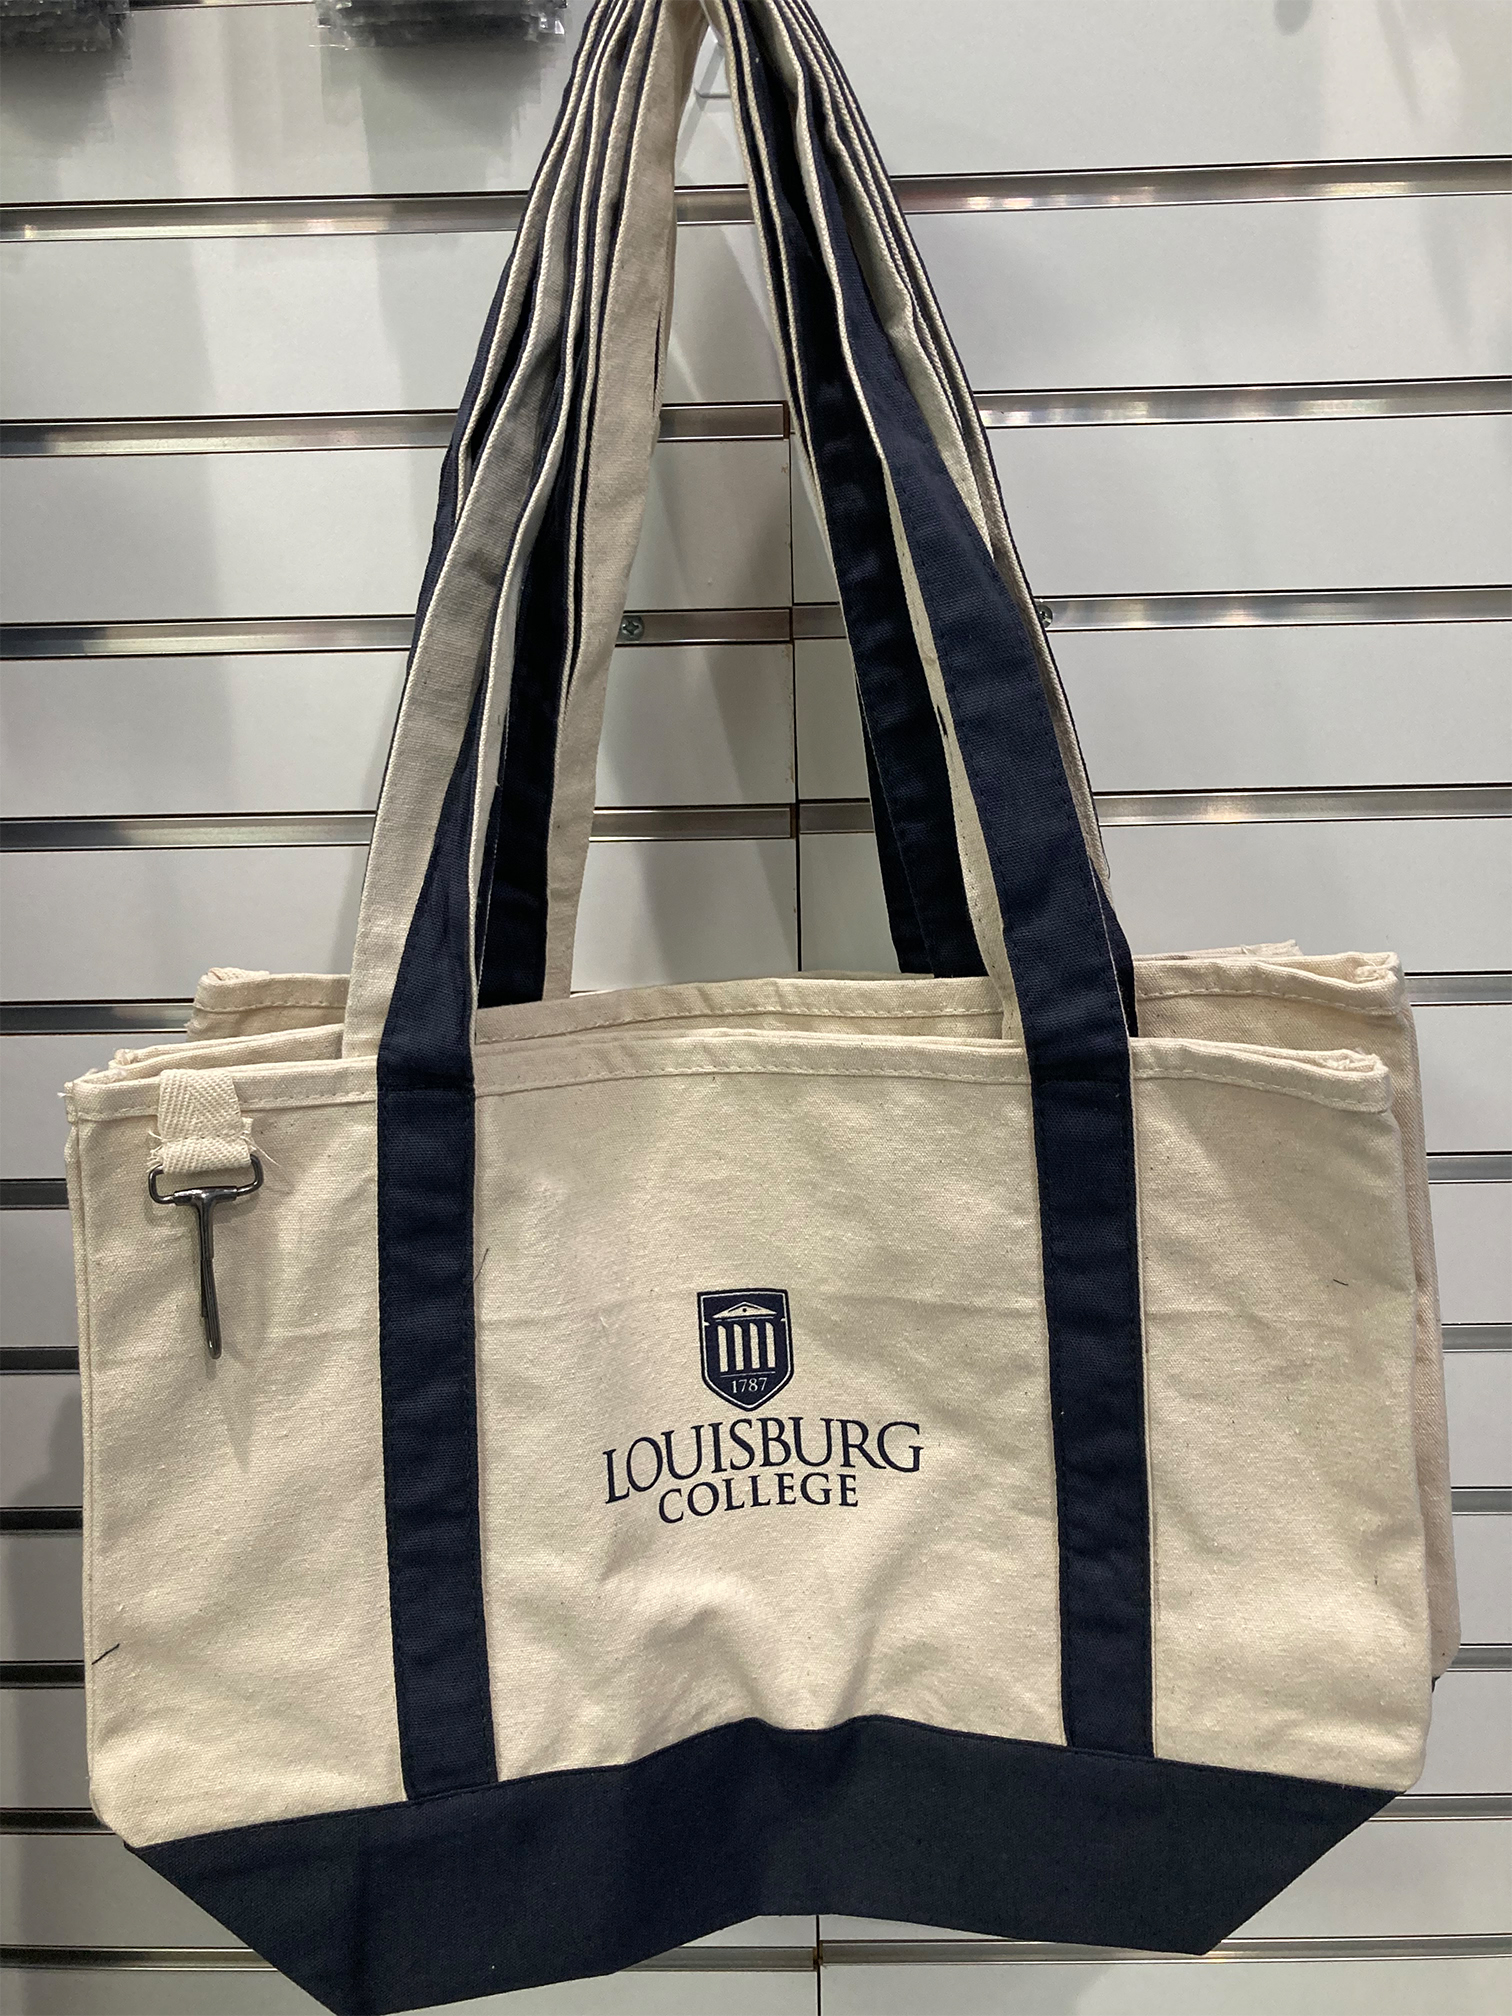 Louisburg College Tote Bag